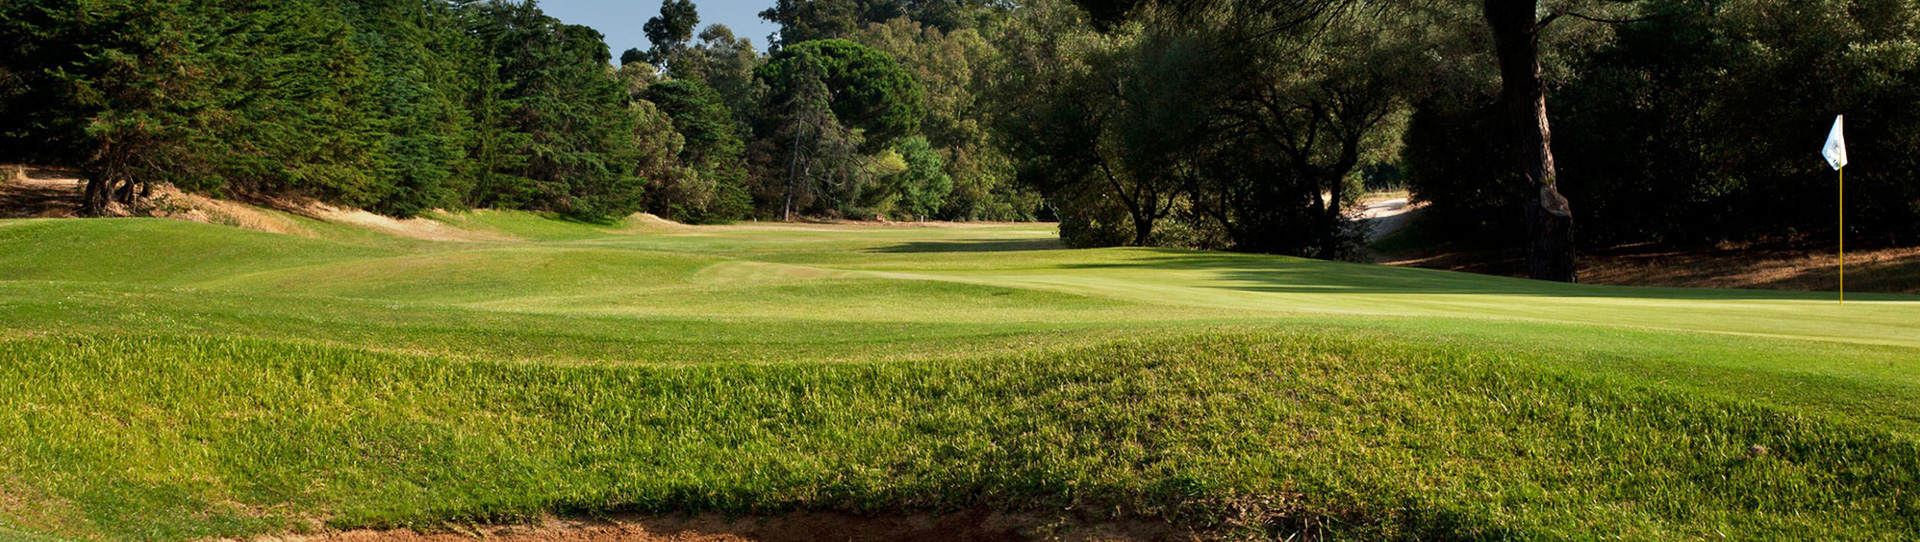 Portugal golf courses - Golf Estoril - Photo 2